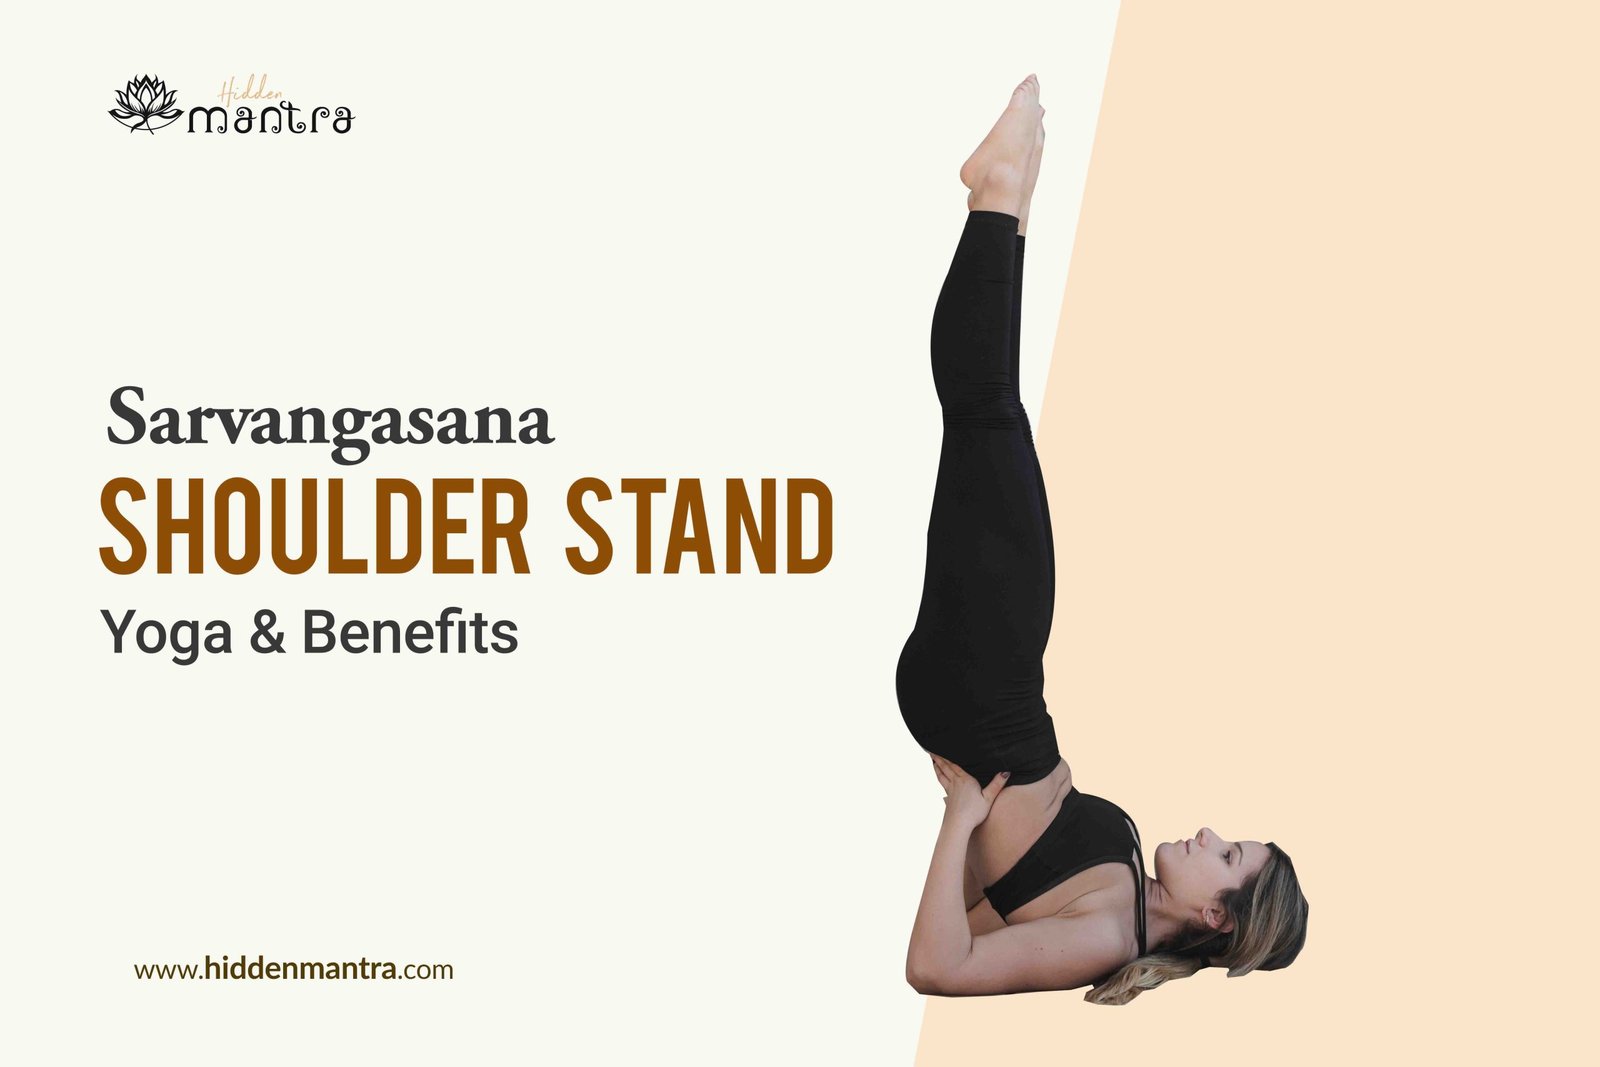 Setu Bandhasana Benefits, Steps, & Tips | Bridge Pose